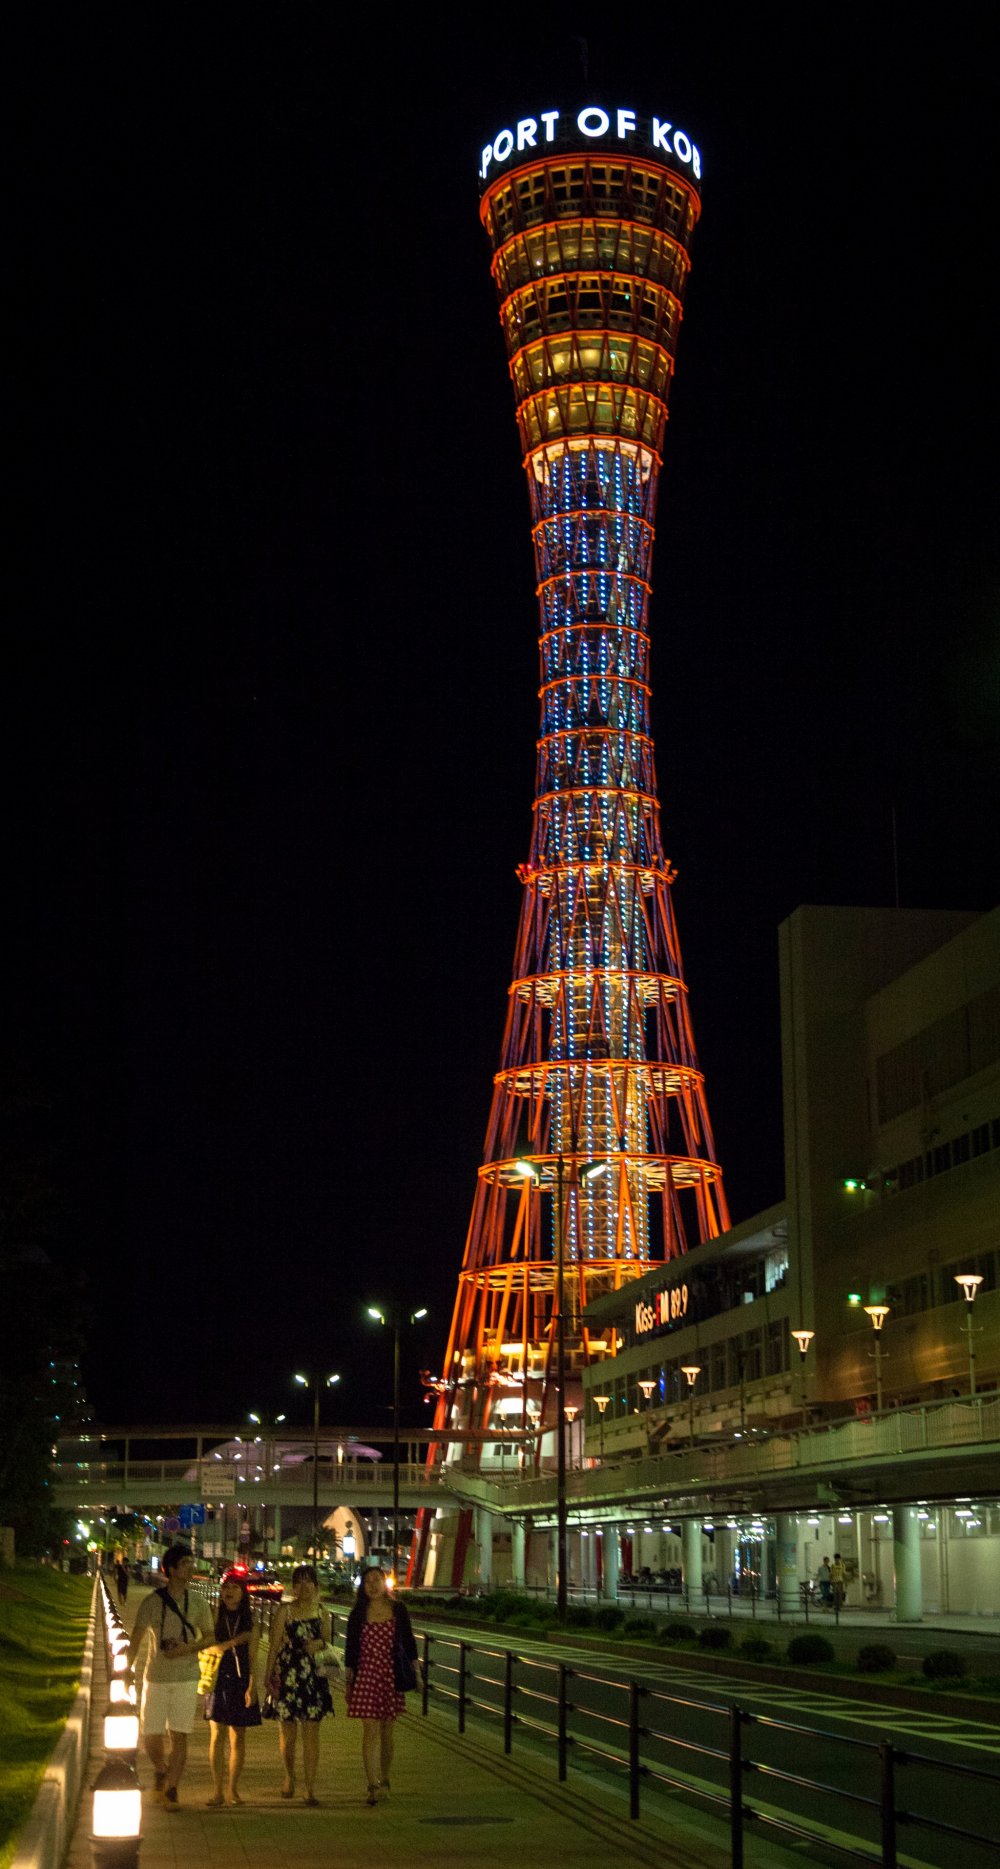 Kobe Port Tower, beautifully illuminated at night